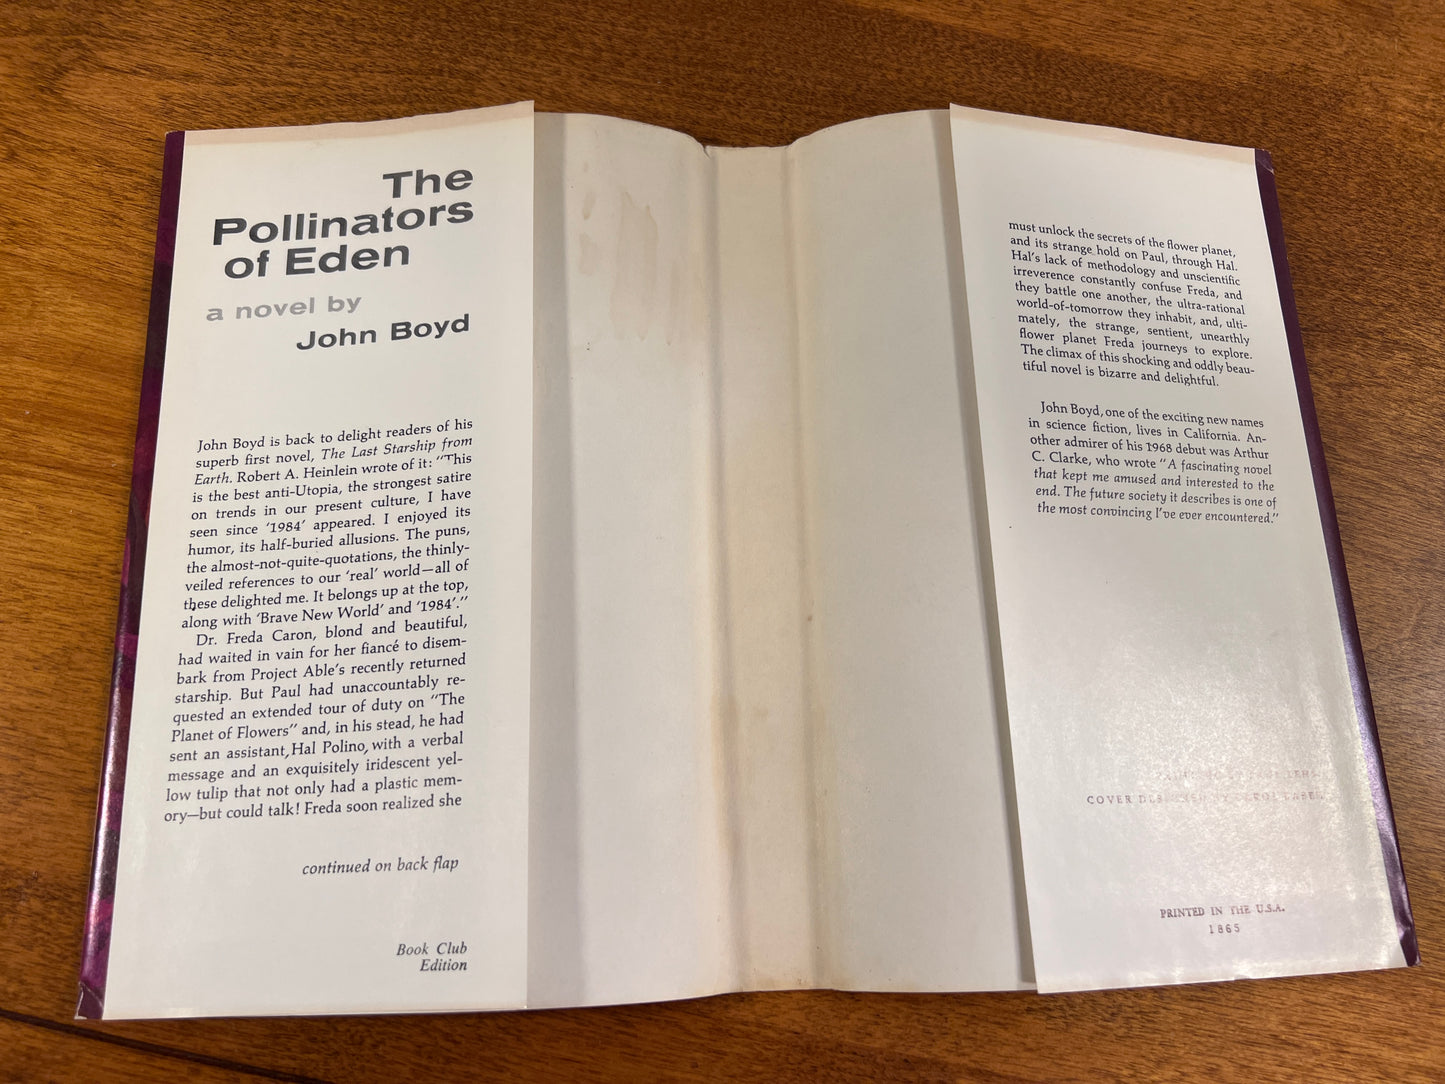 The Pollinators of Eden by John Boyd